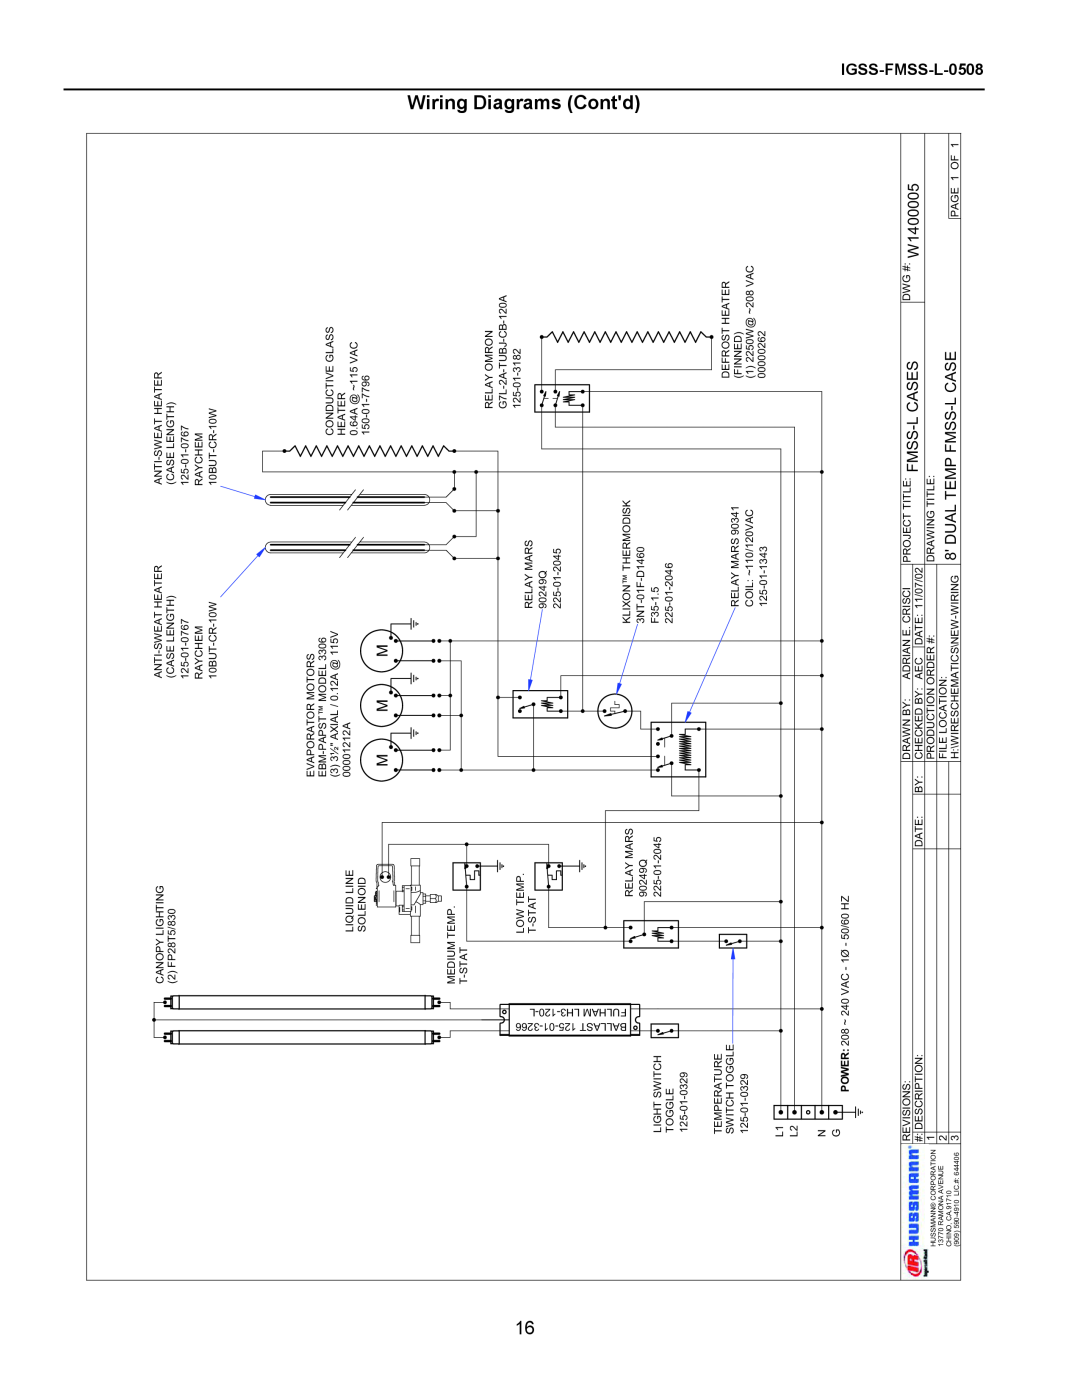 hussman FMSS-L operation manual Diagrams Contd, Wiring, Igss, Fmss, 0508 